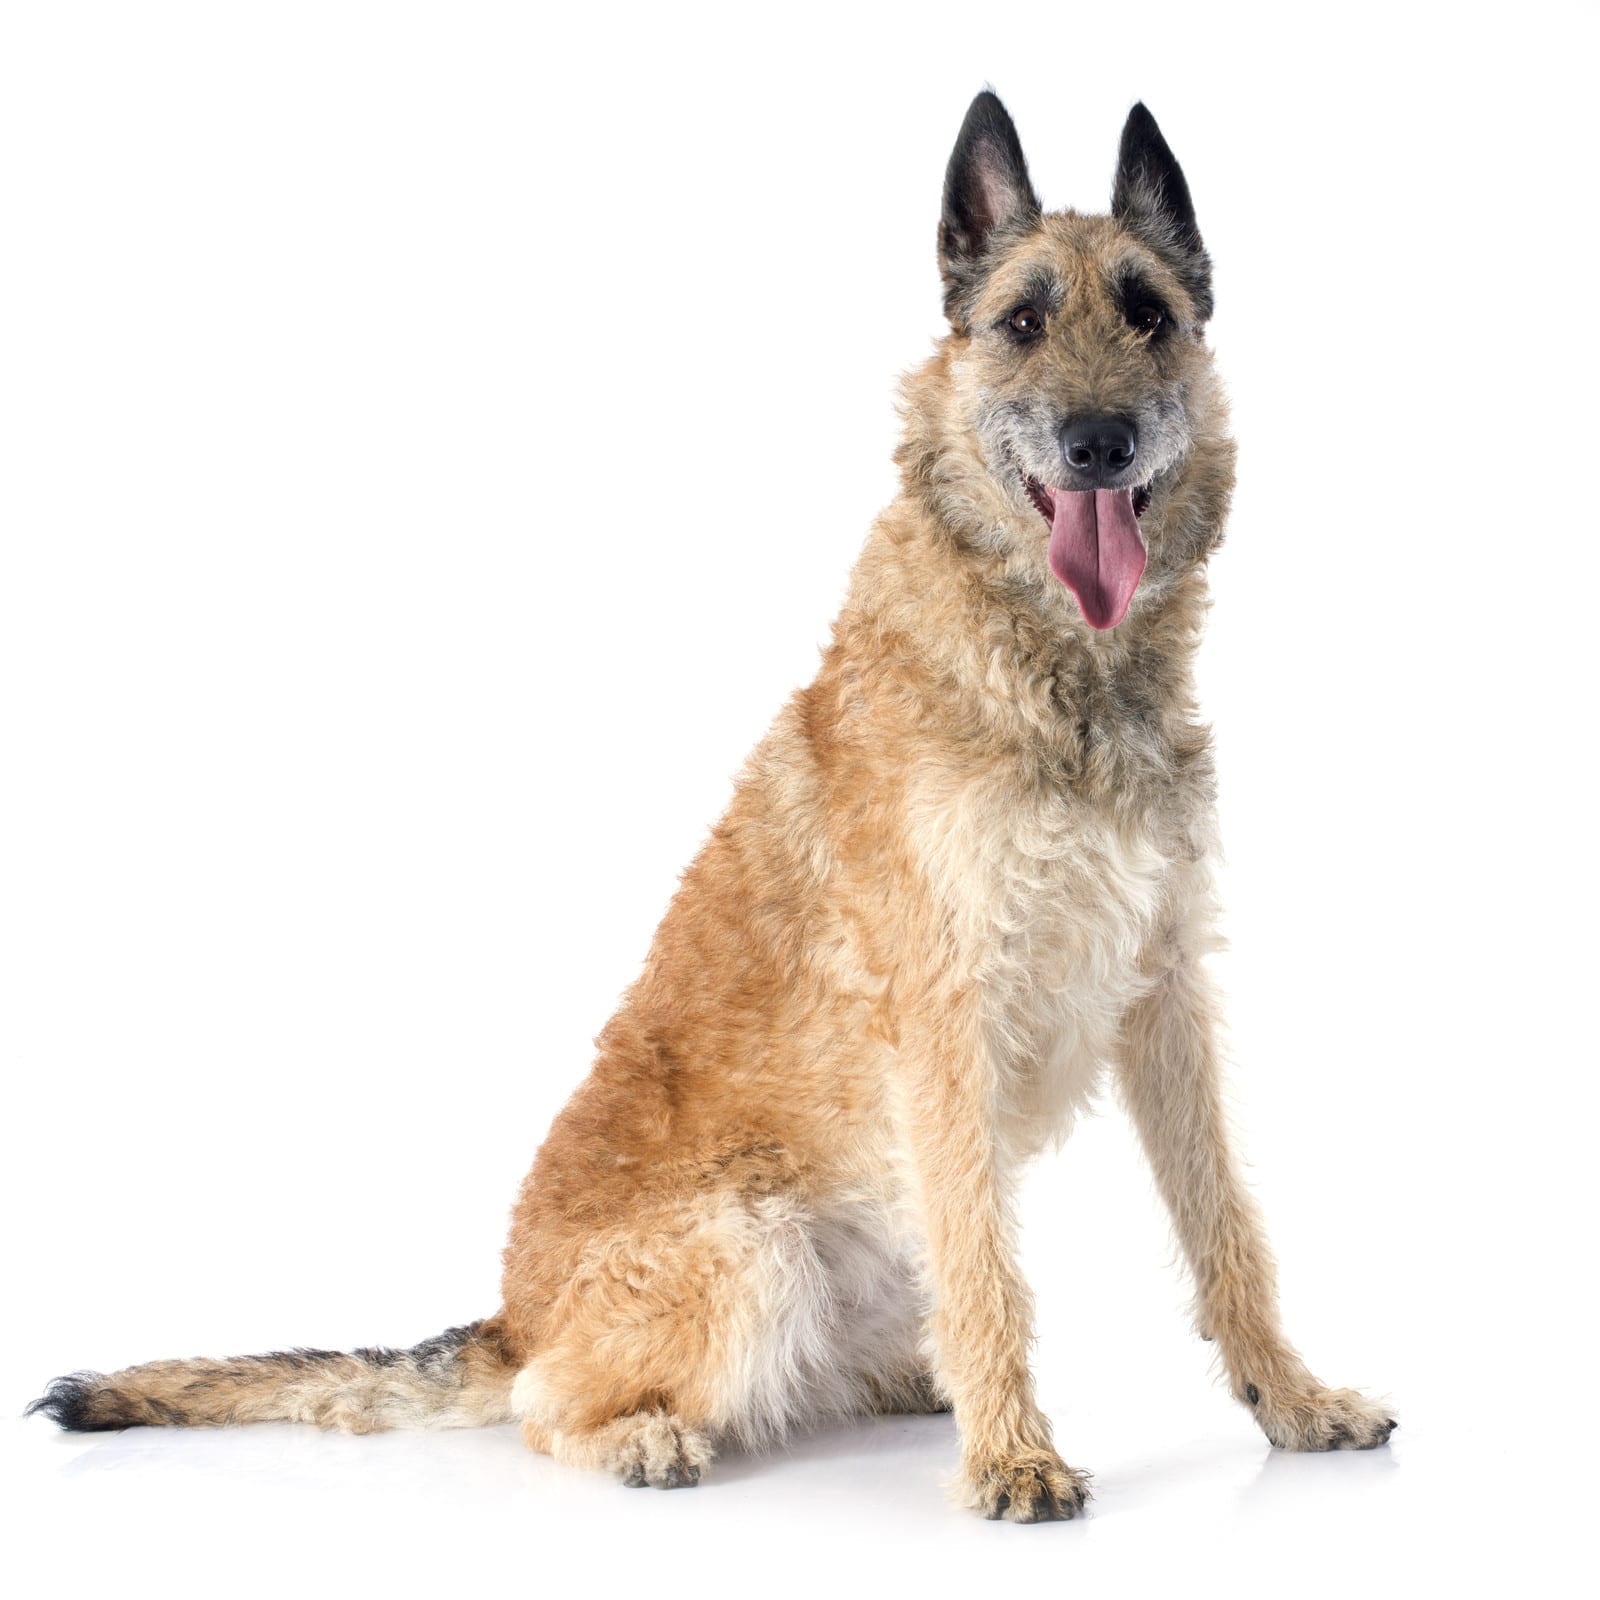 Laekenois shepherd dog from Belgium